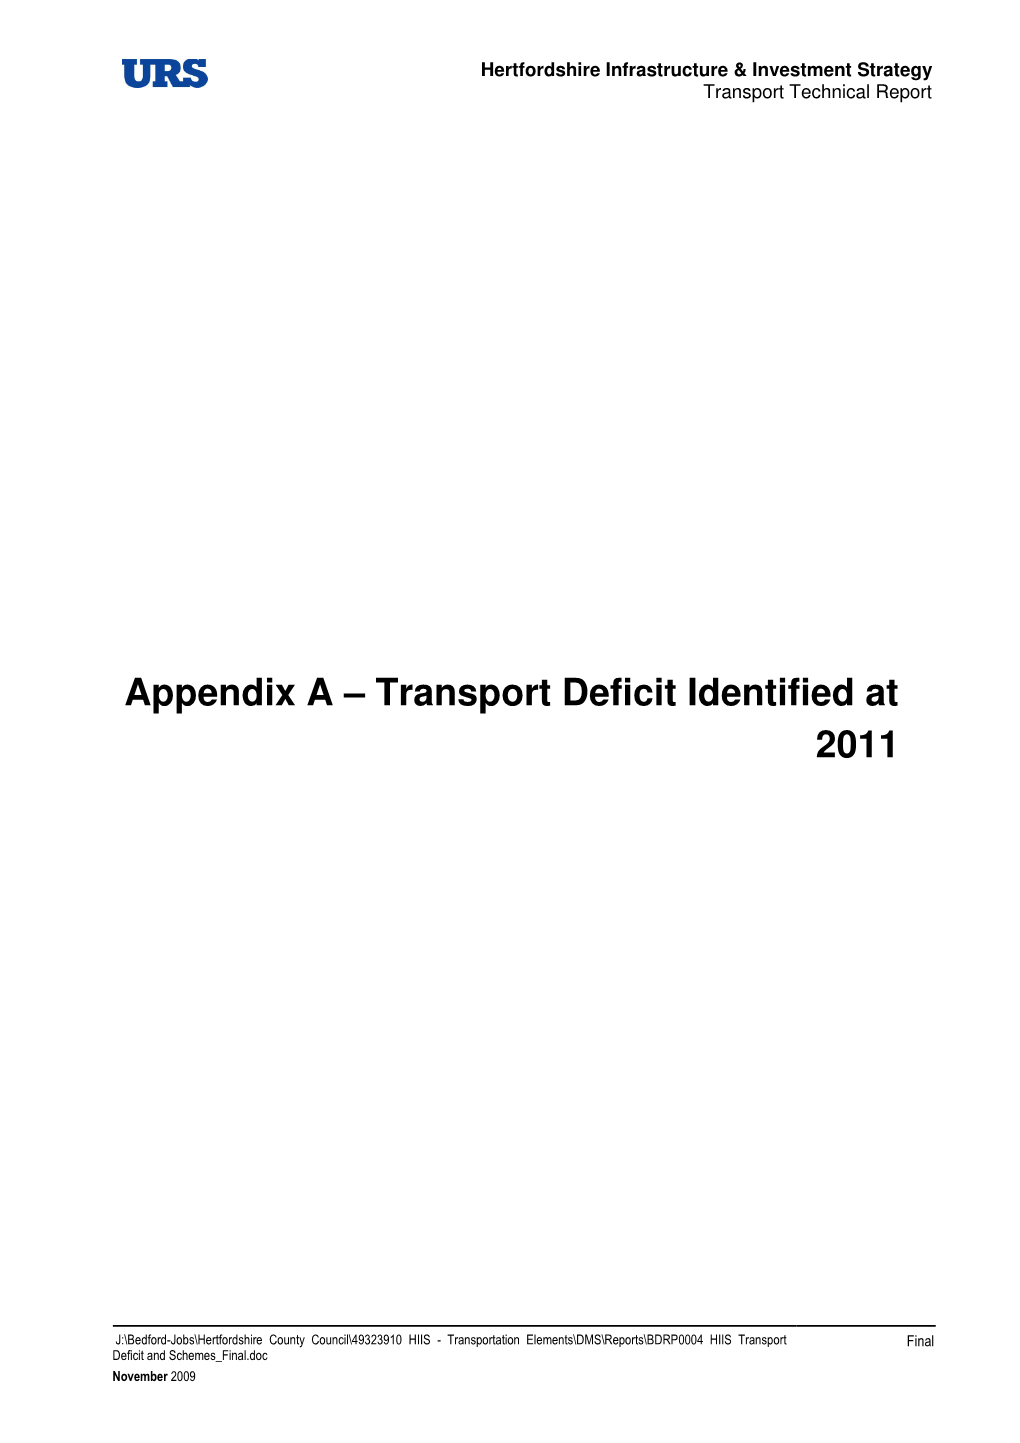 Transport Technical Report